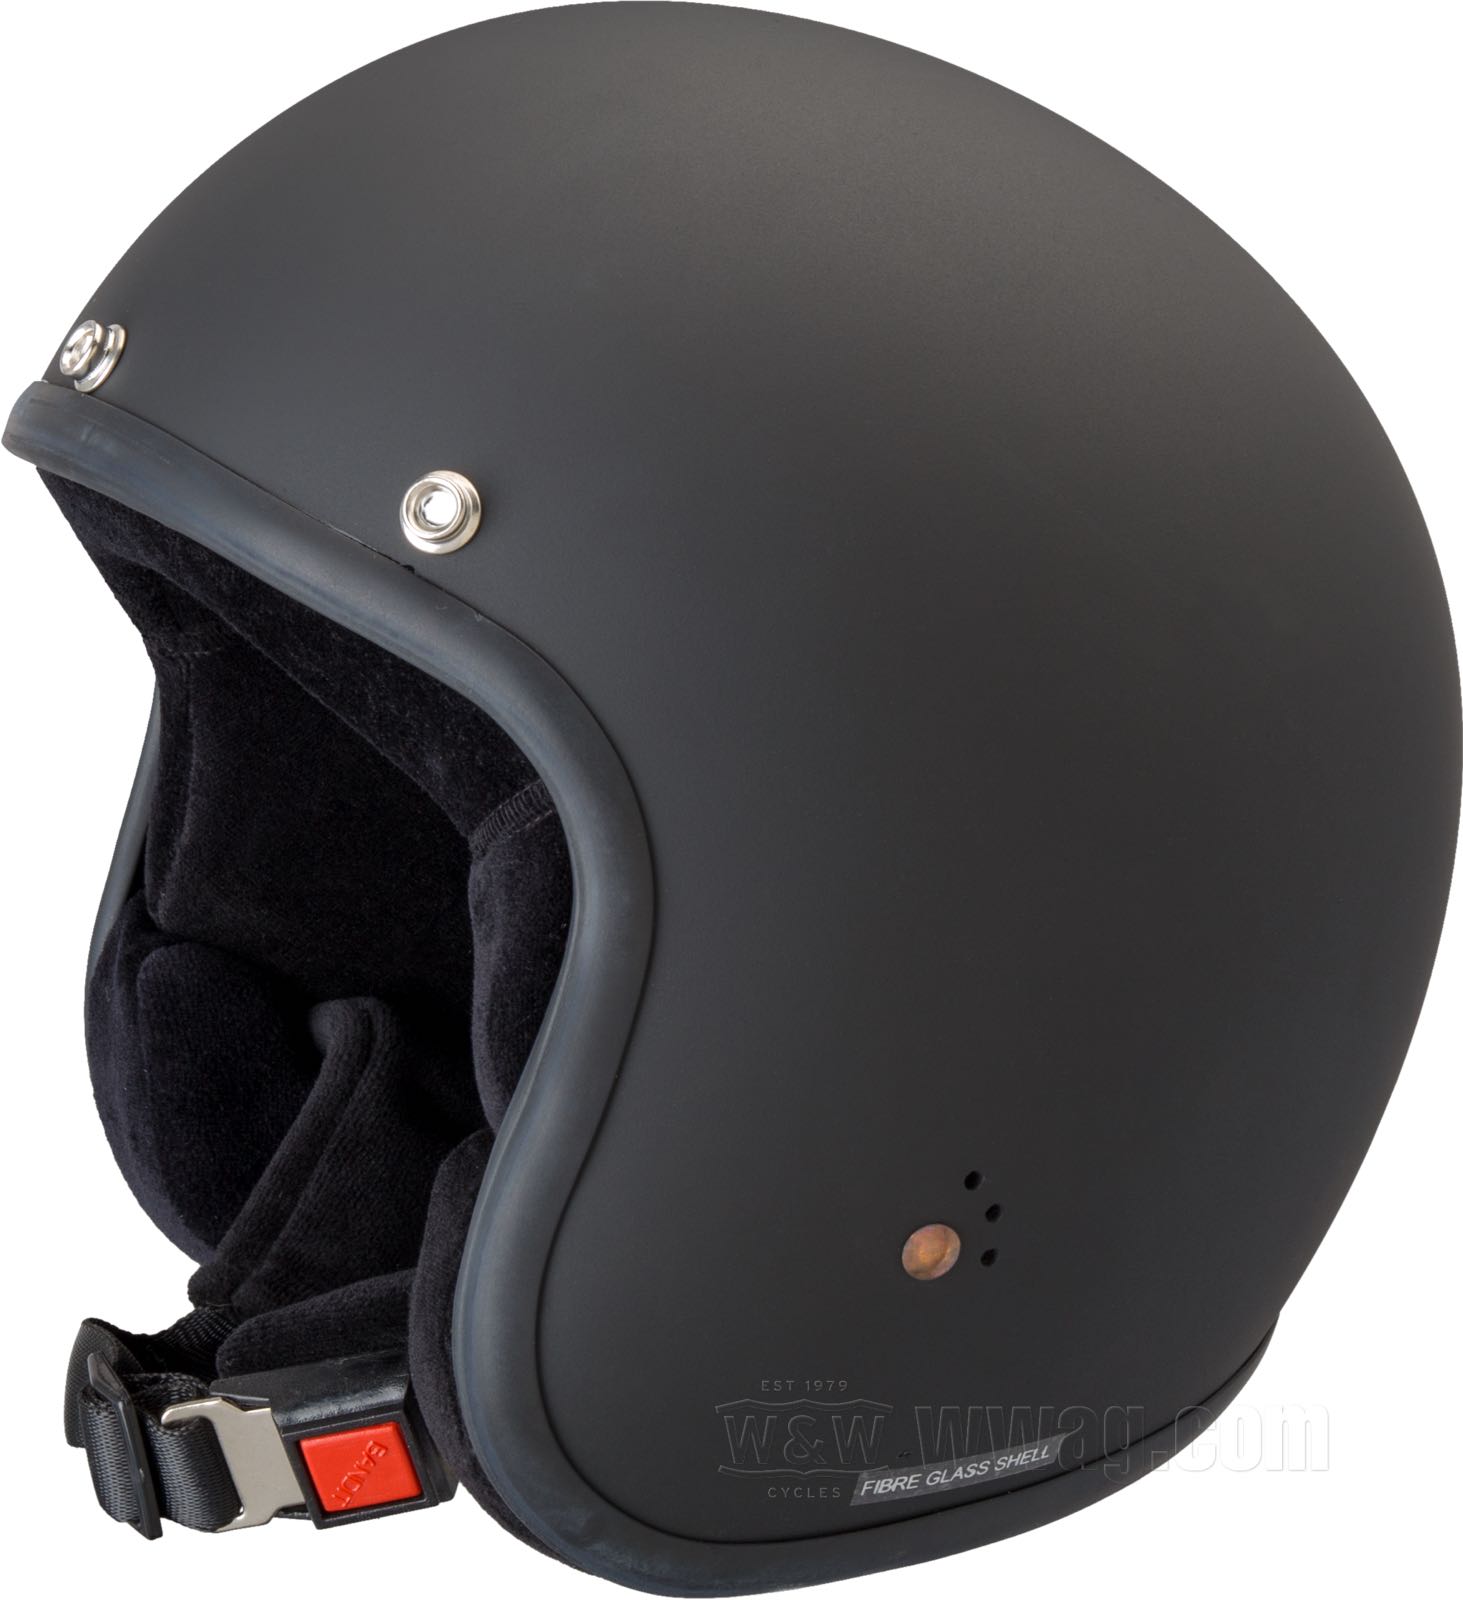 W&W Cycles - Casco Jet »Slimline Jet « di Bandit Helmets